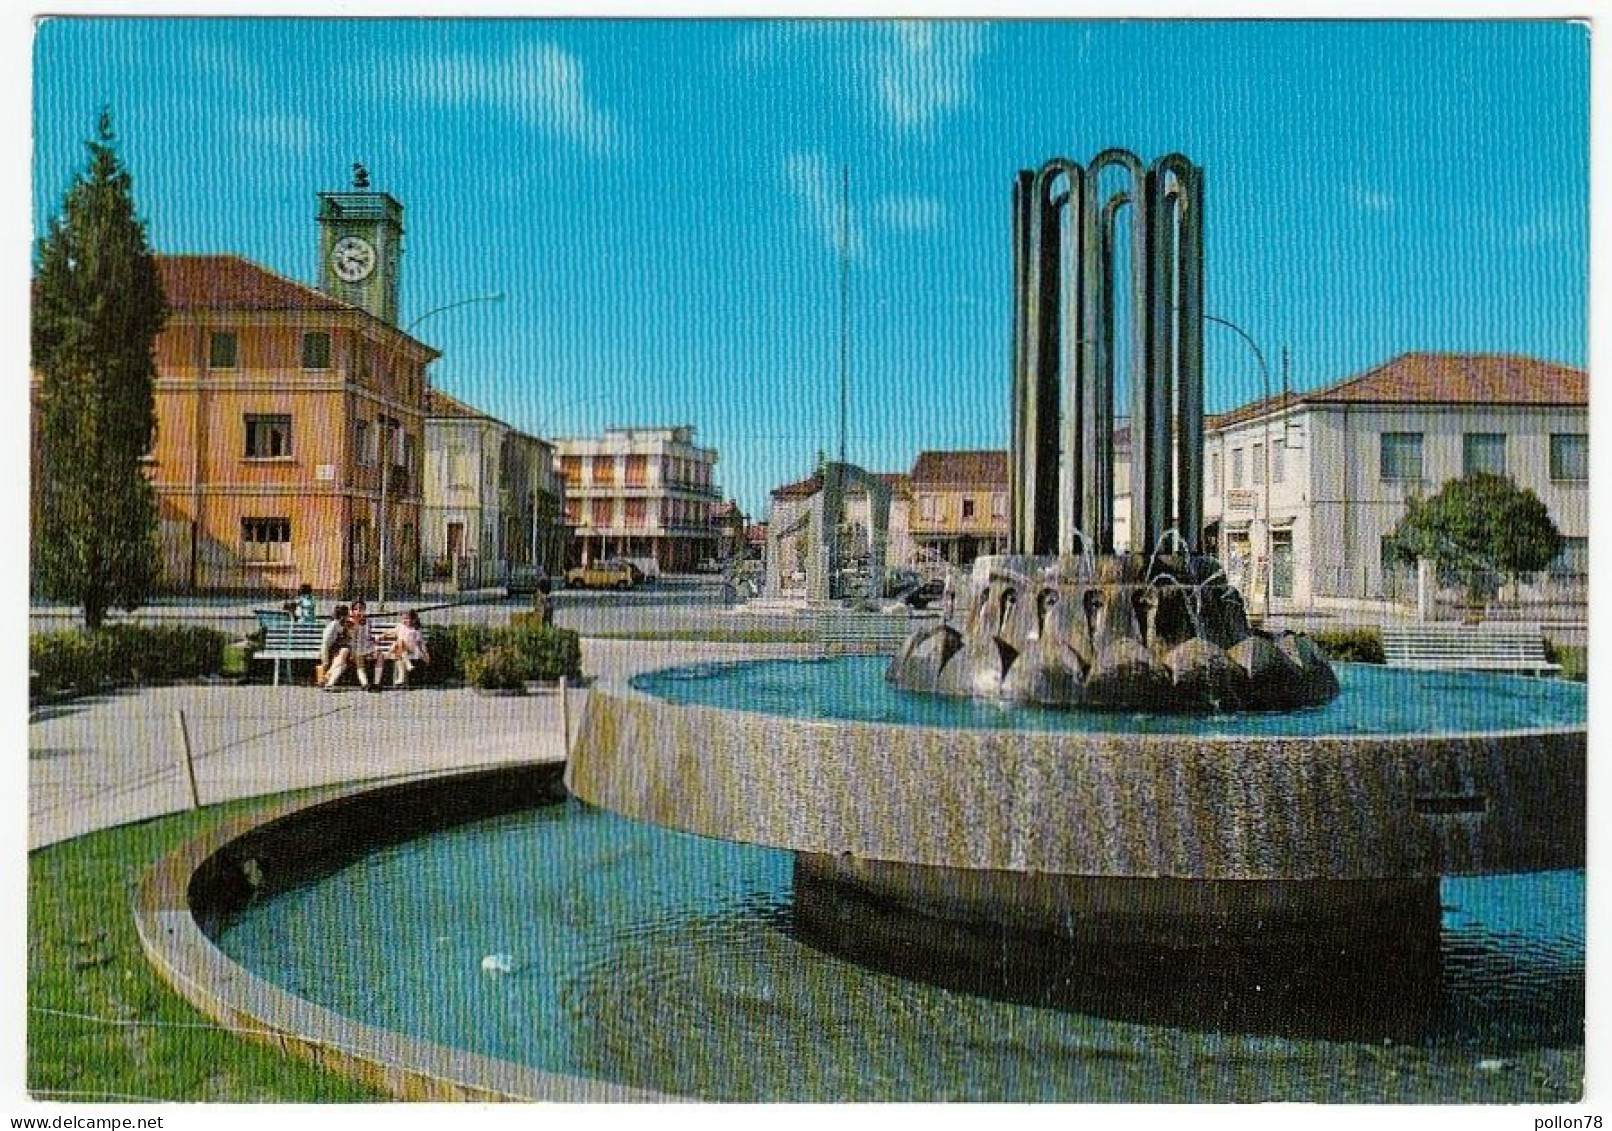 TAGLIO DI PO - FONTANA E PIAZZA IV NOVEMBRE - ROVIGO - 1975 - Rovigo